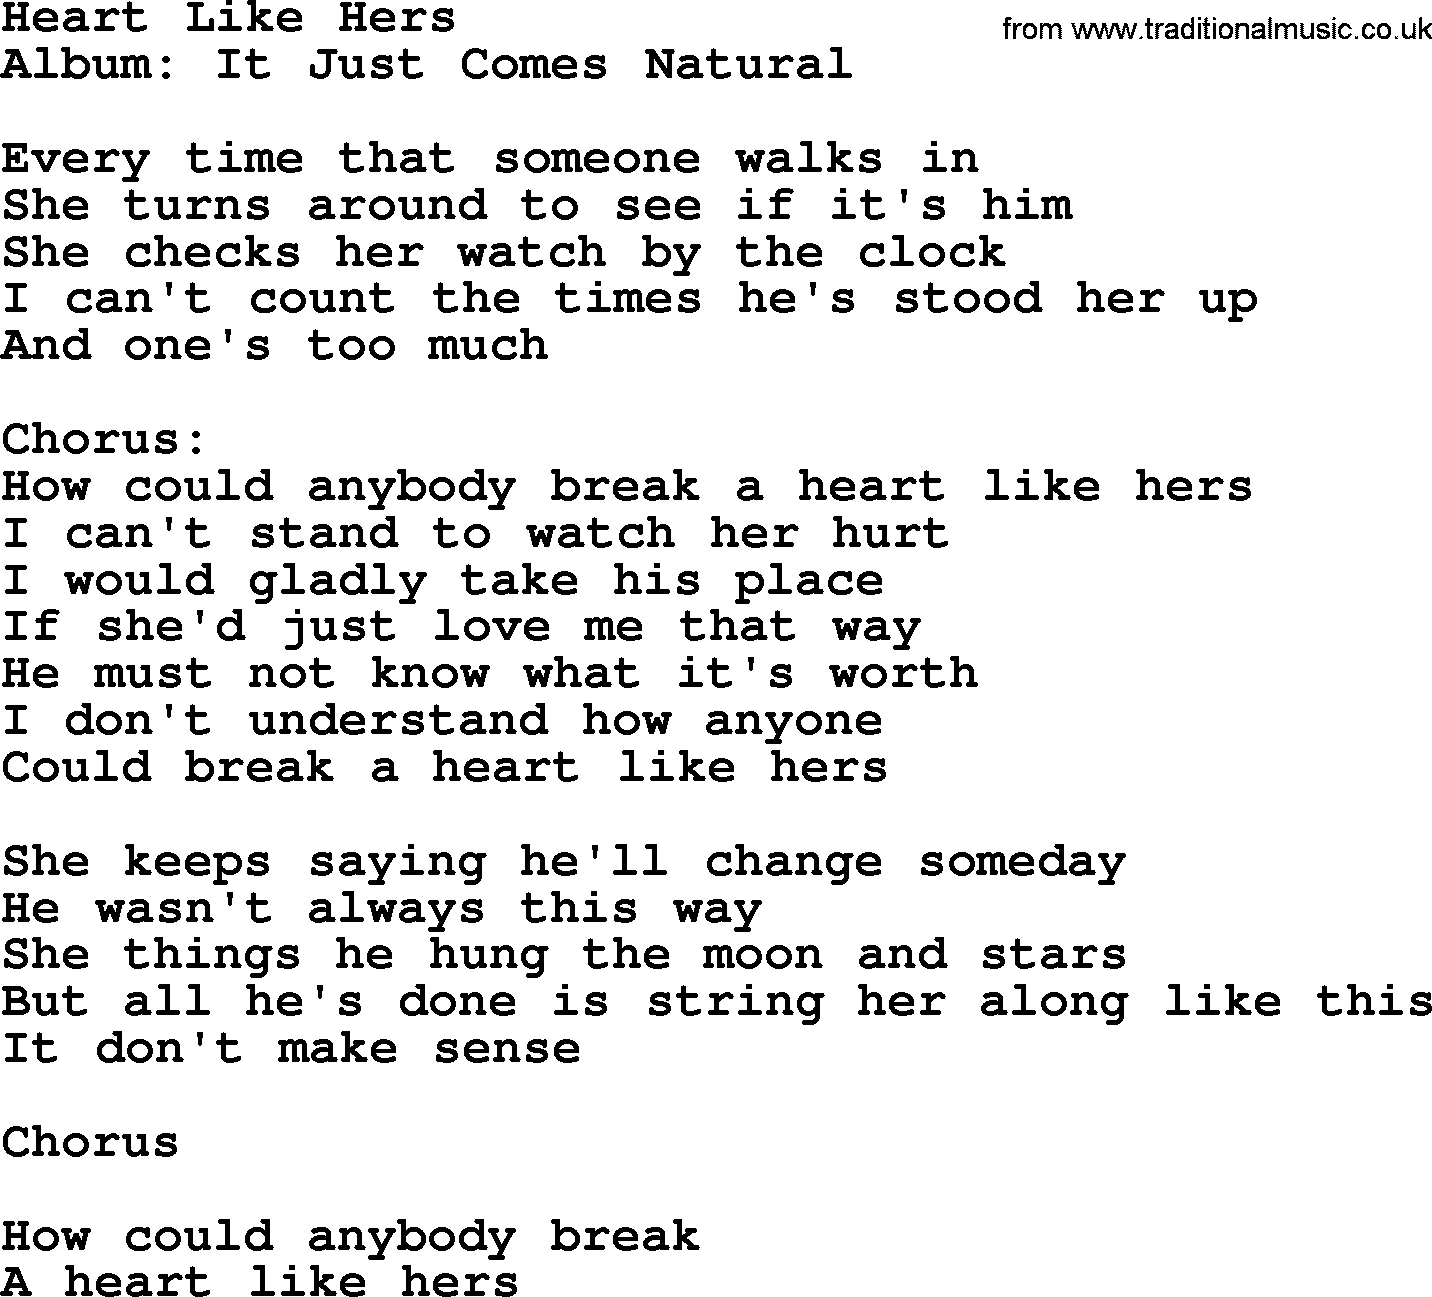 George Strait song: Heart Like Hers, lyrics